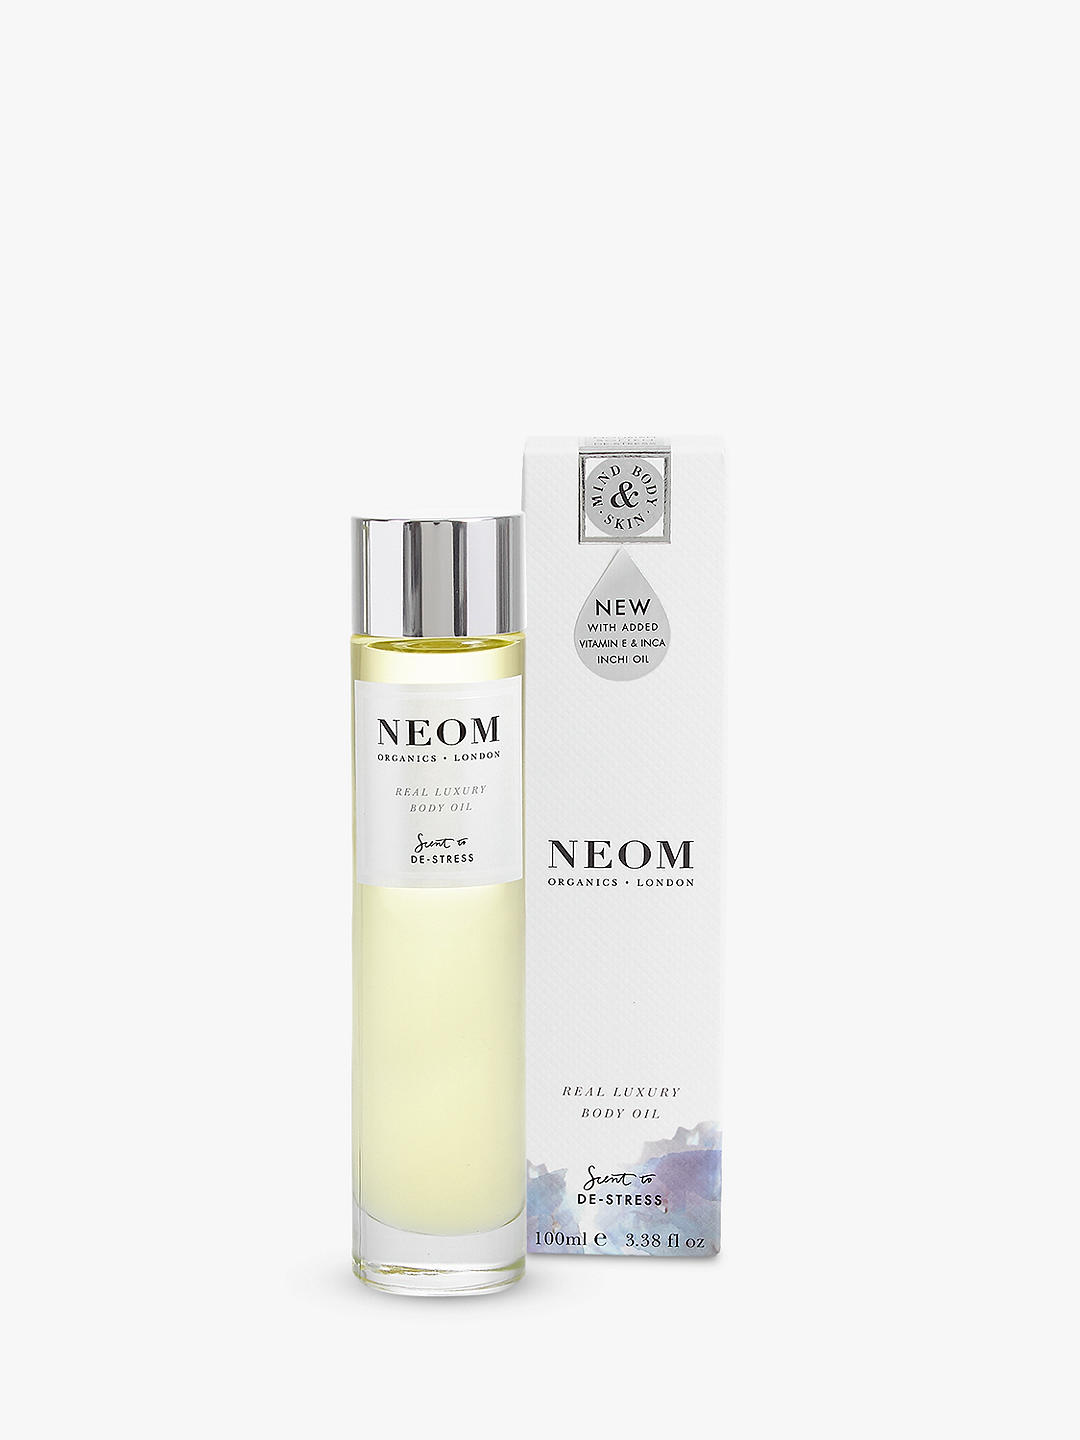 Neom Organics London Real Luxury Vitamin Body Oil, 100ml 1